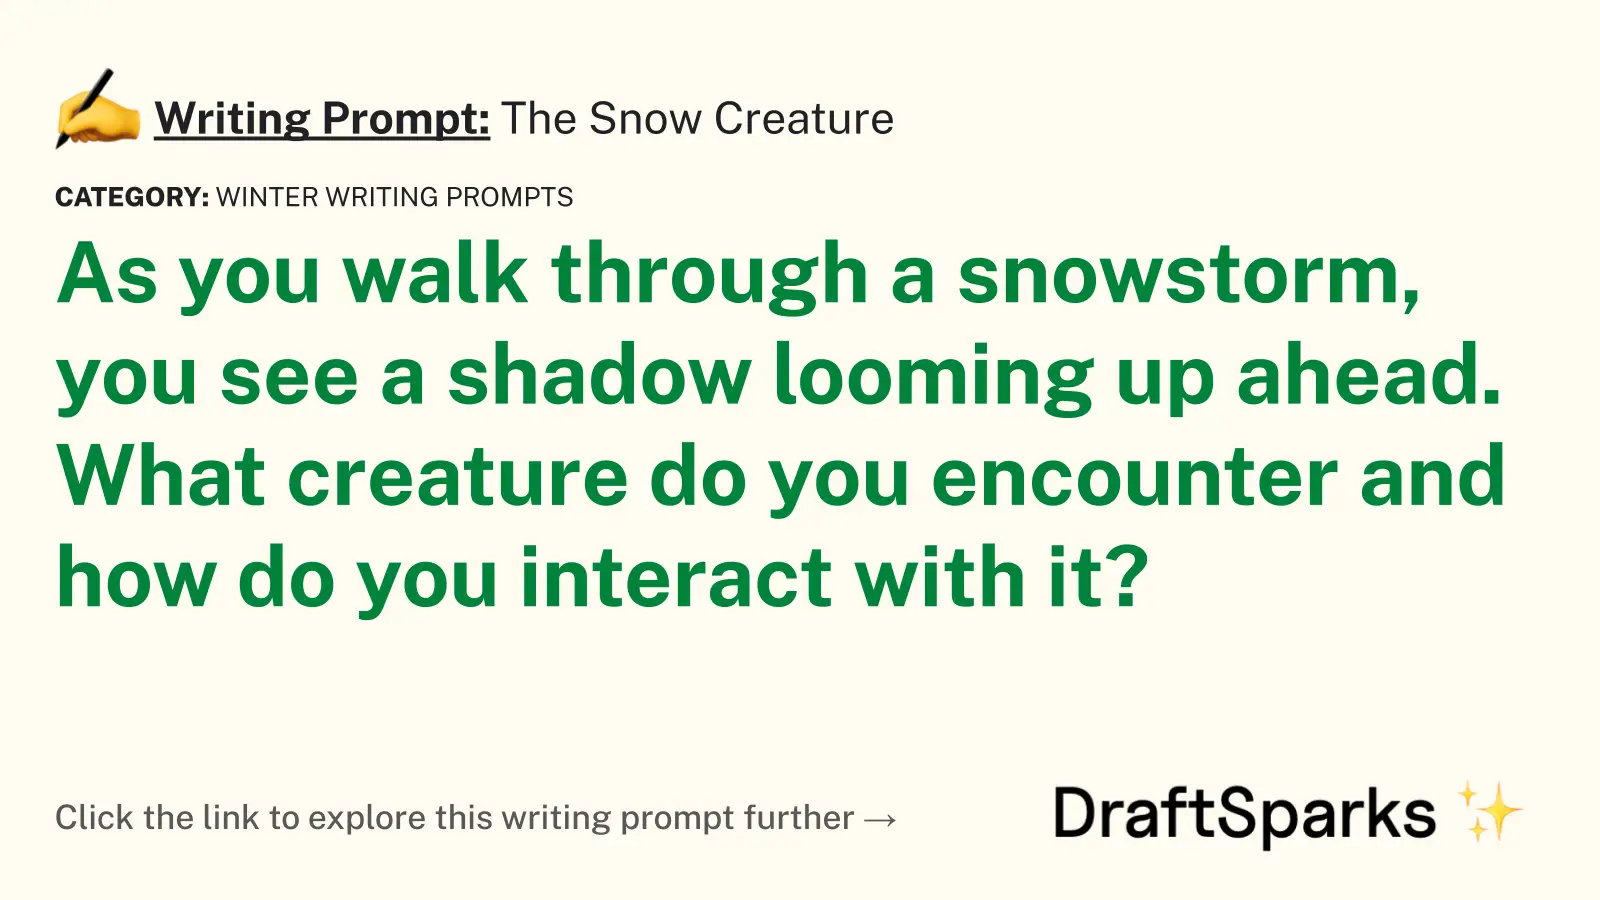 The Snow Creature